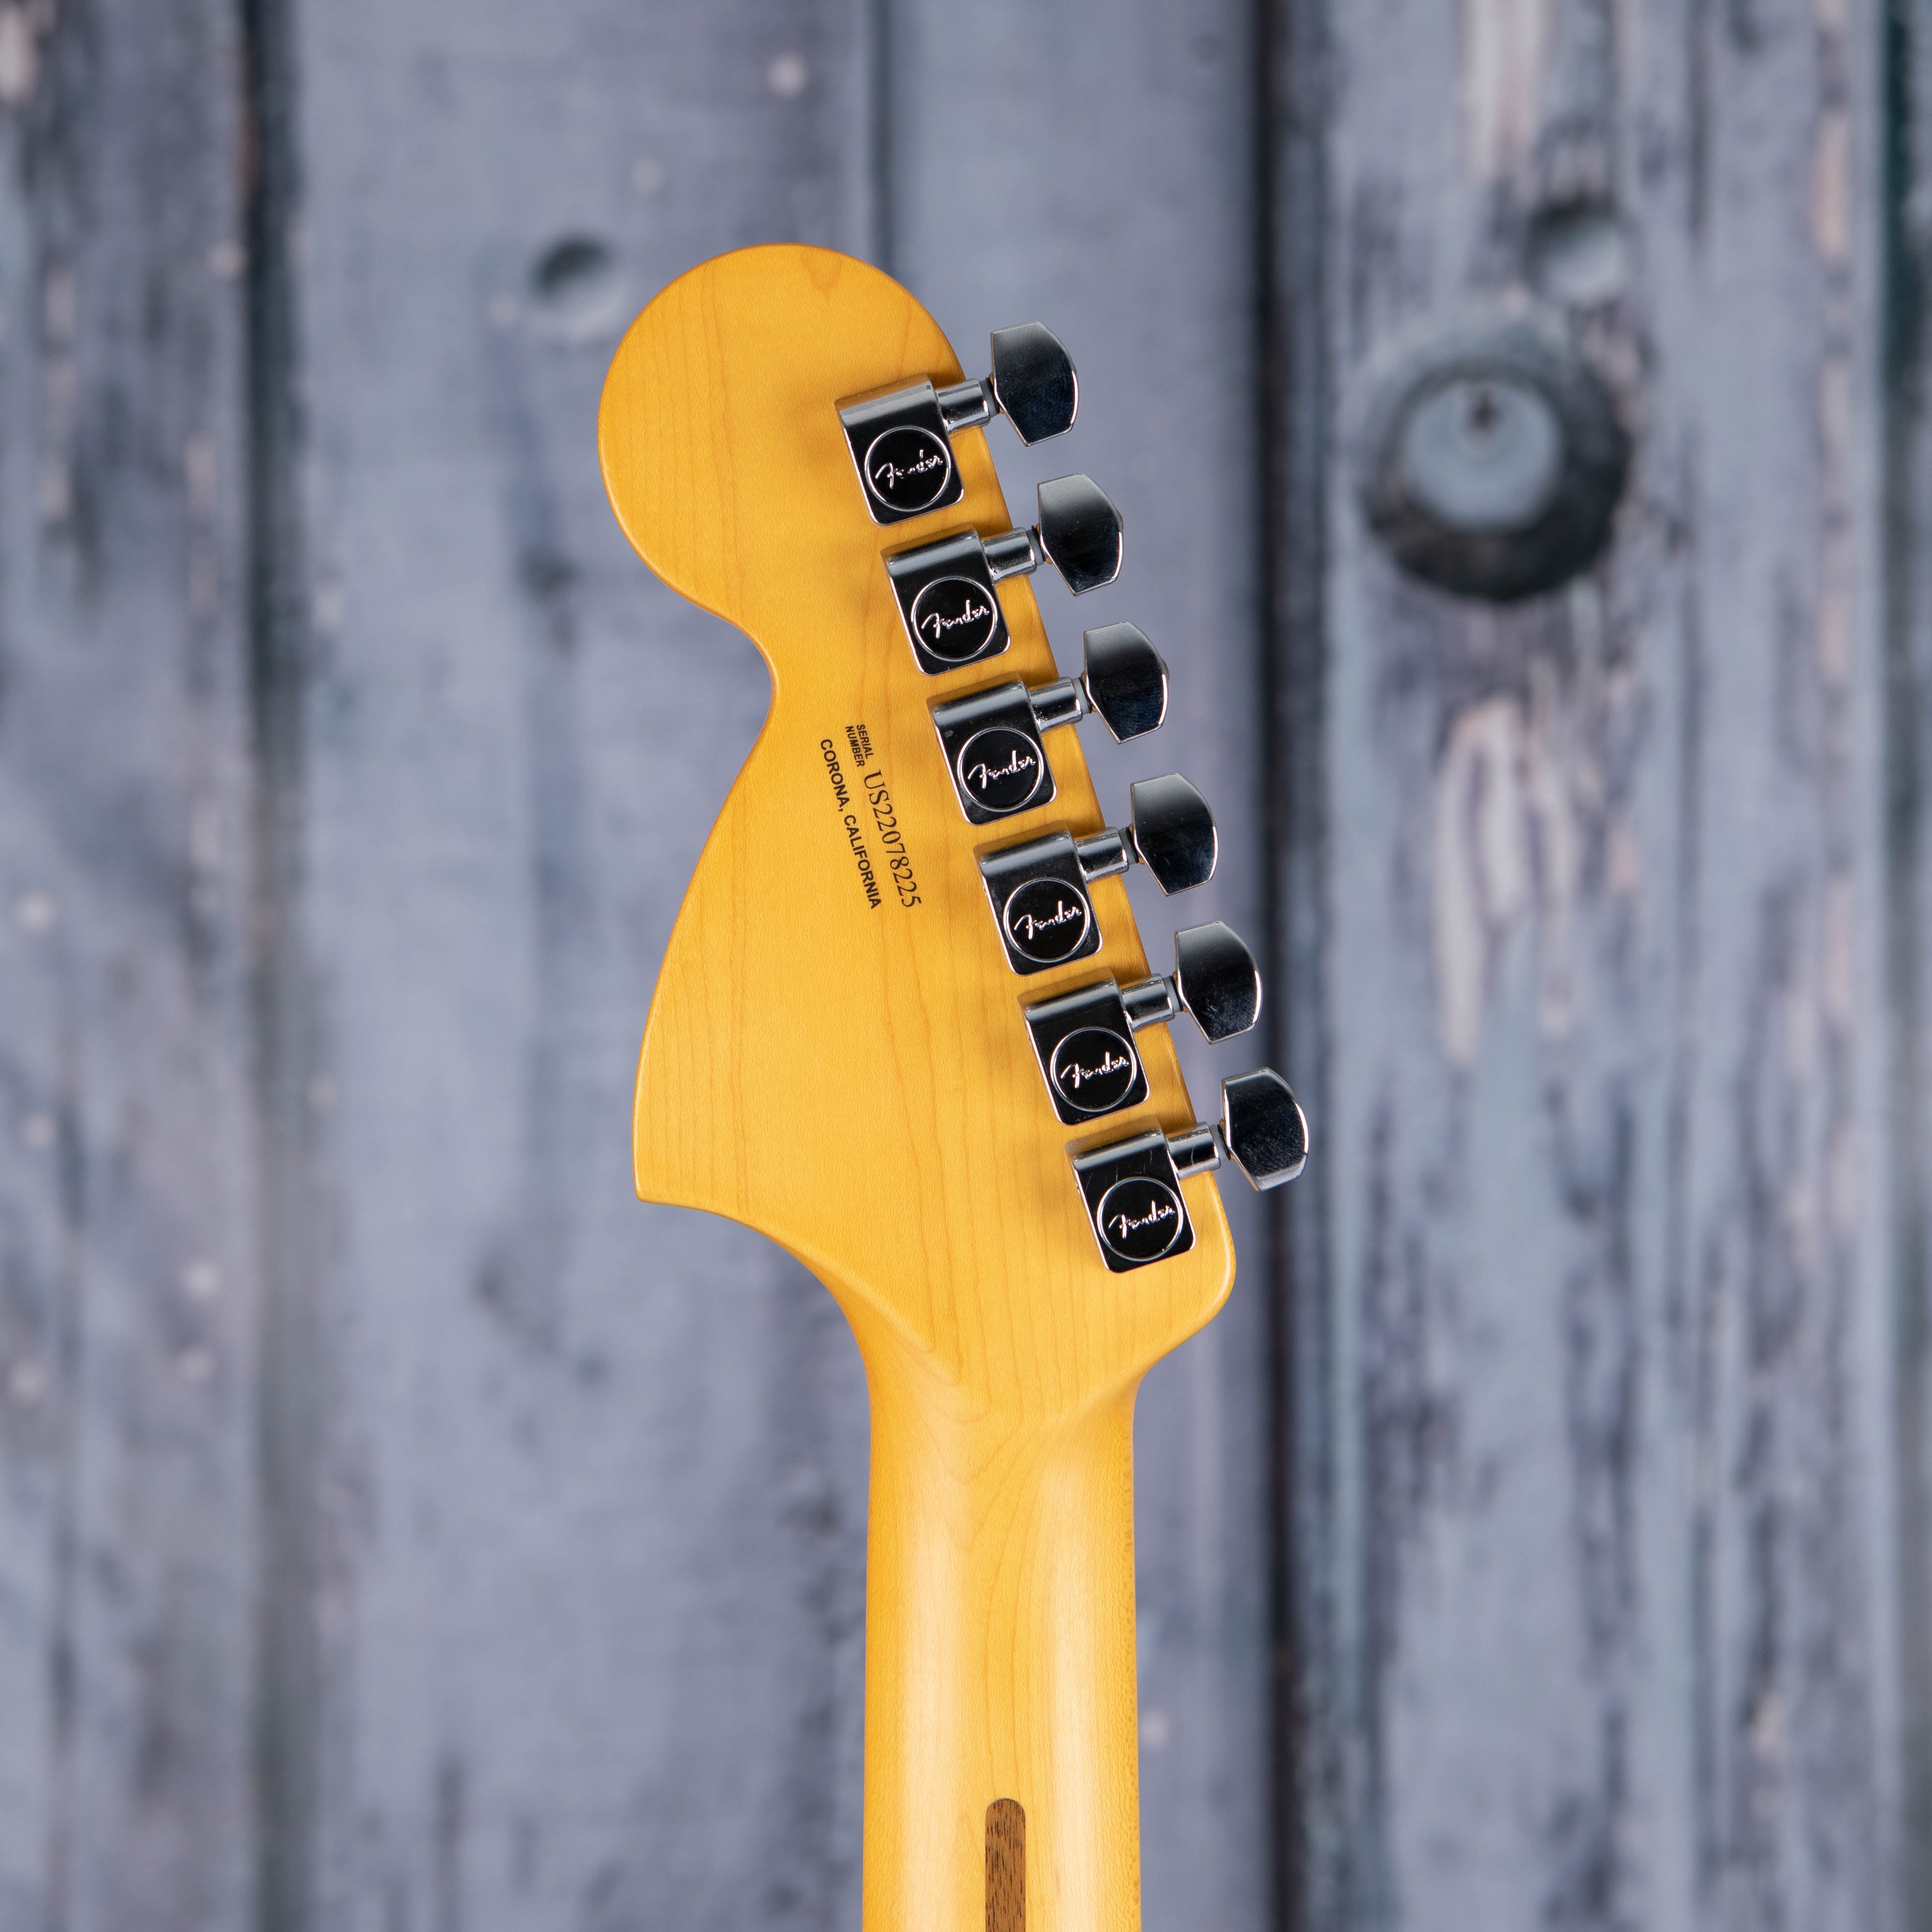 Fender American Professional II Telecaster Deluxe Electric Guitar, Miami Blue *DEMO MODEL*, back headstock